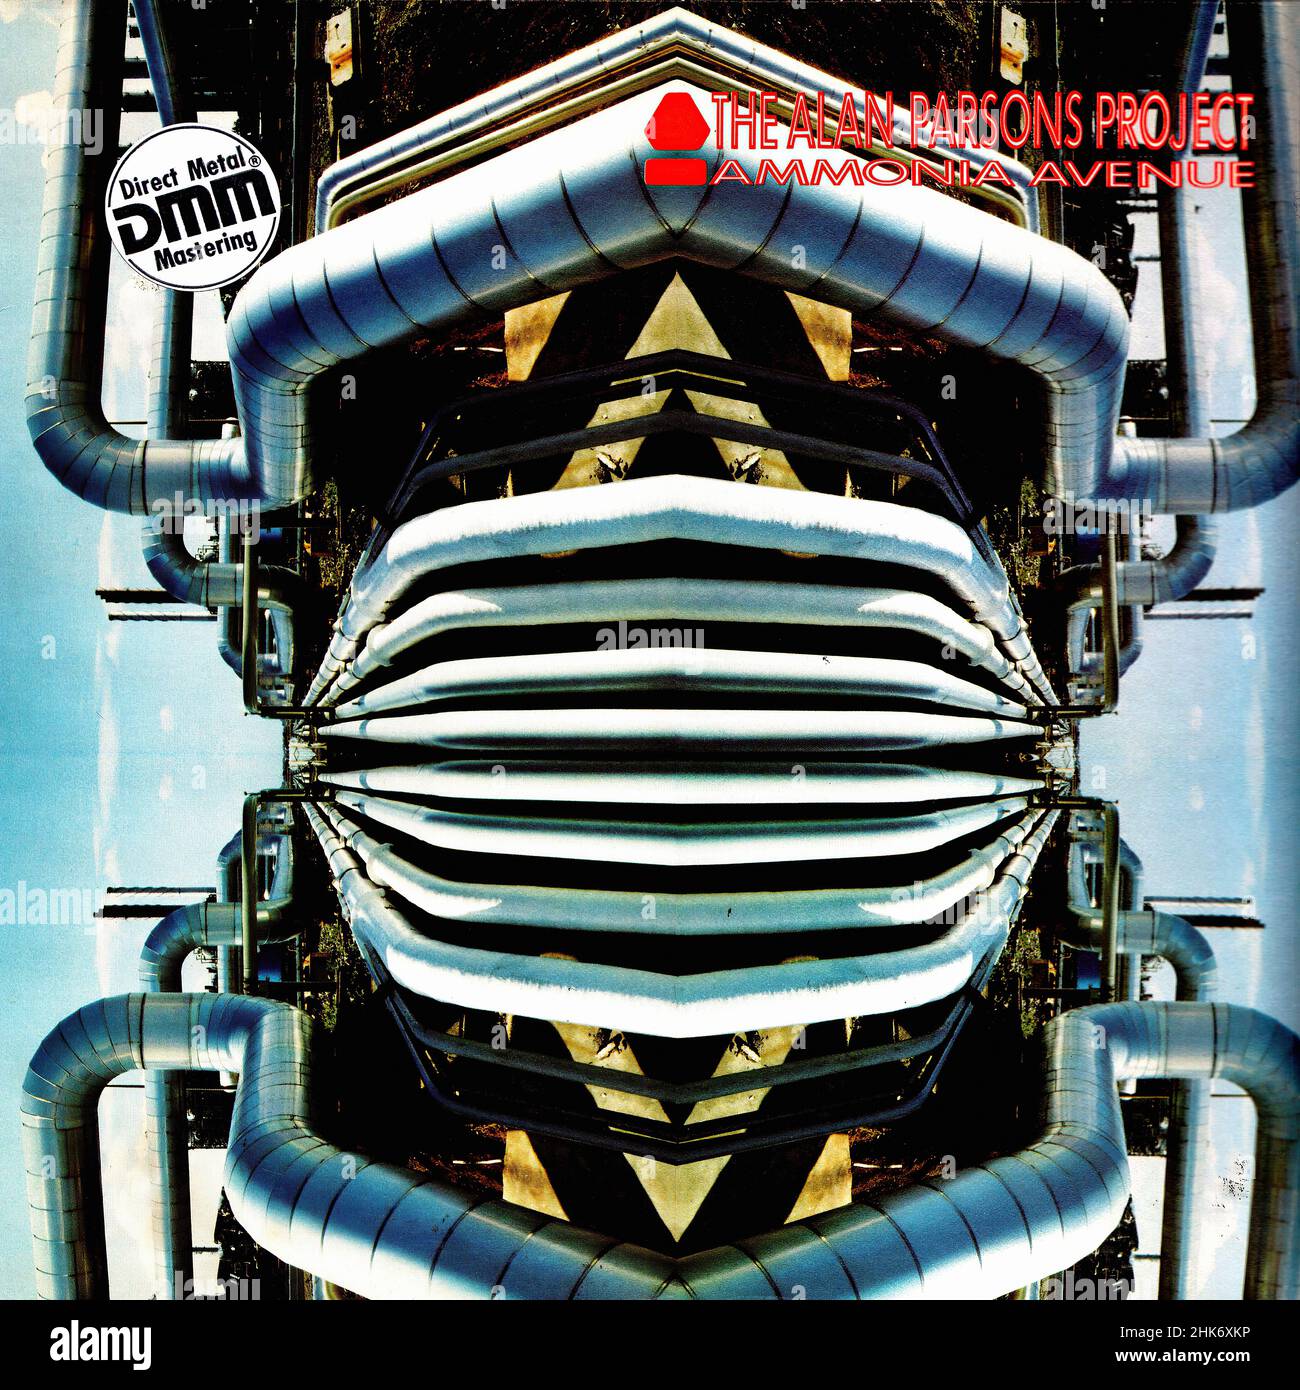 Vintage vinyl record cover - Parsons, Alan Project - Ammonia Avenue - D - 1984 Stock Photo